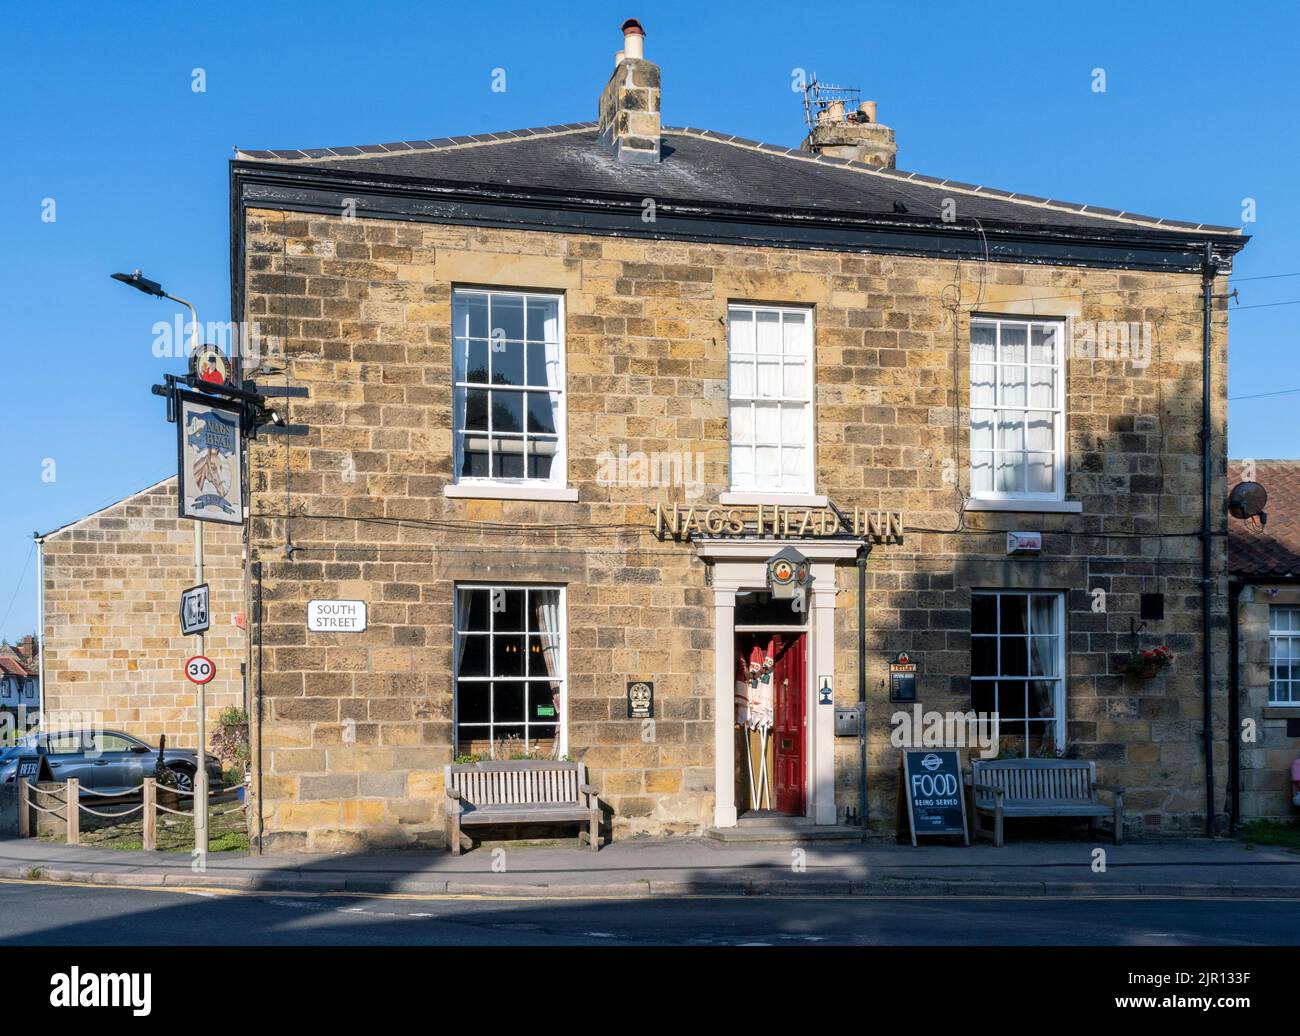 The Nags Head Inn - (casa pública) - 35 High Street, Scalby, Scarborough, North Yorkshire, Inglaterra, REINO UNIDO Foto de stock